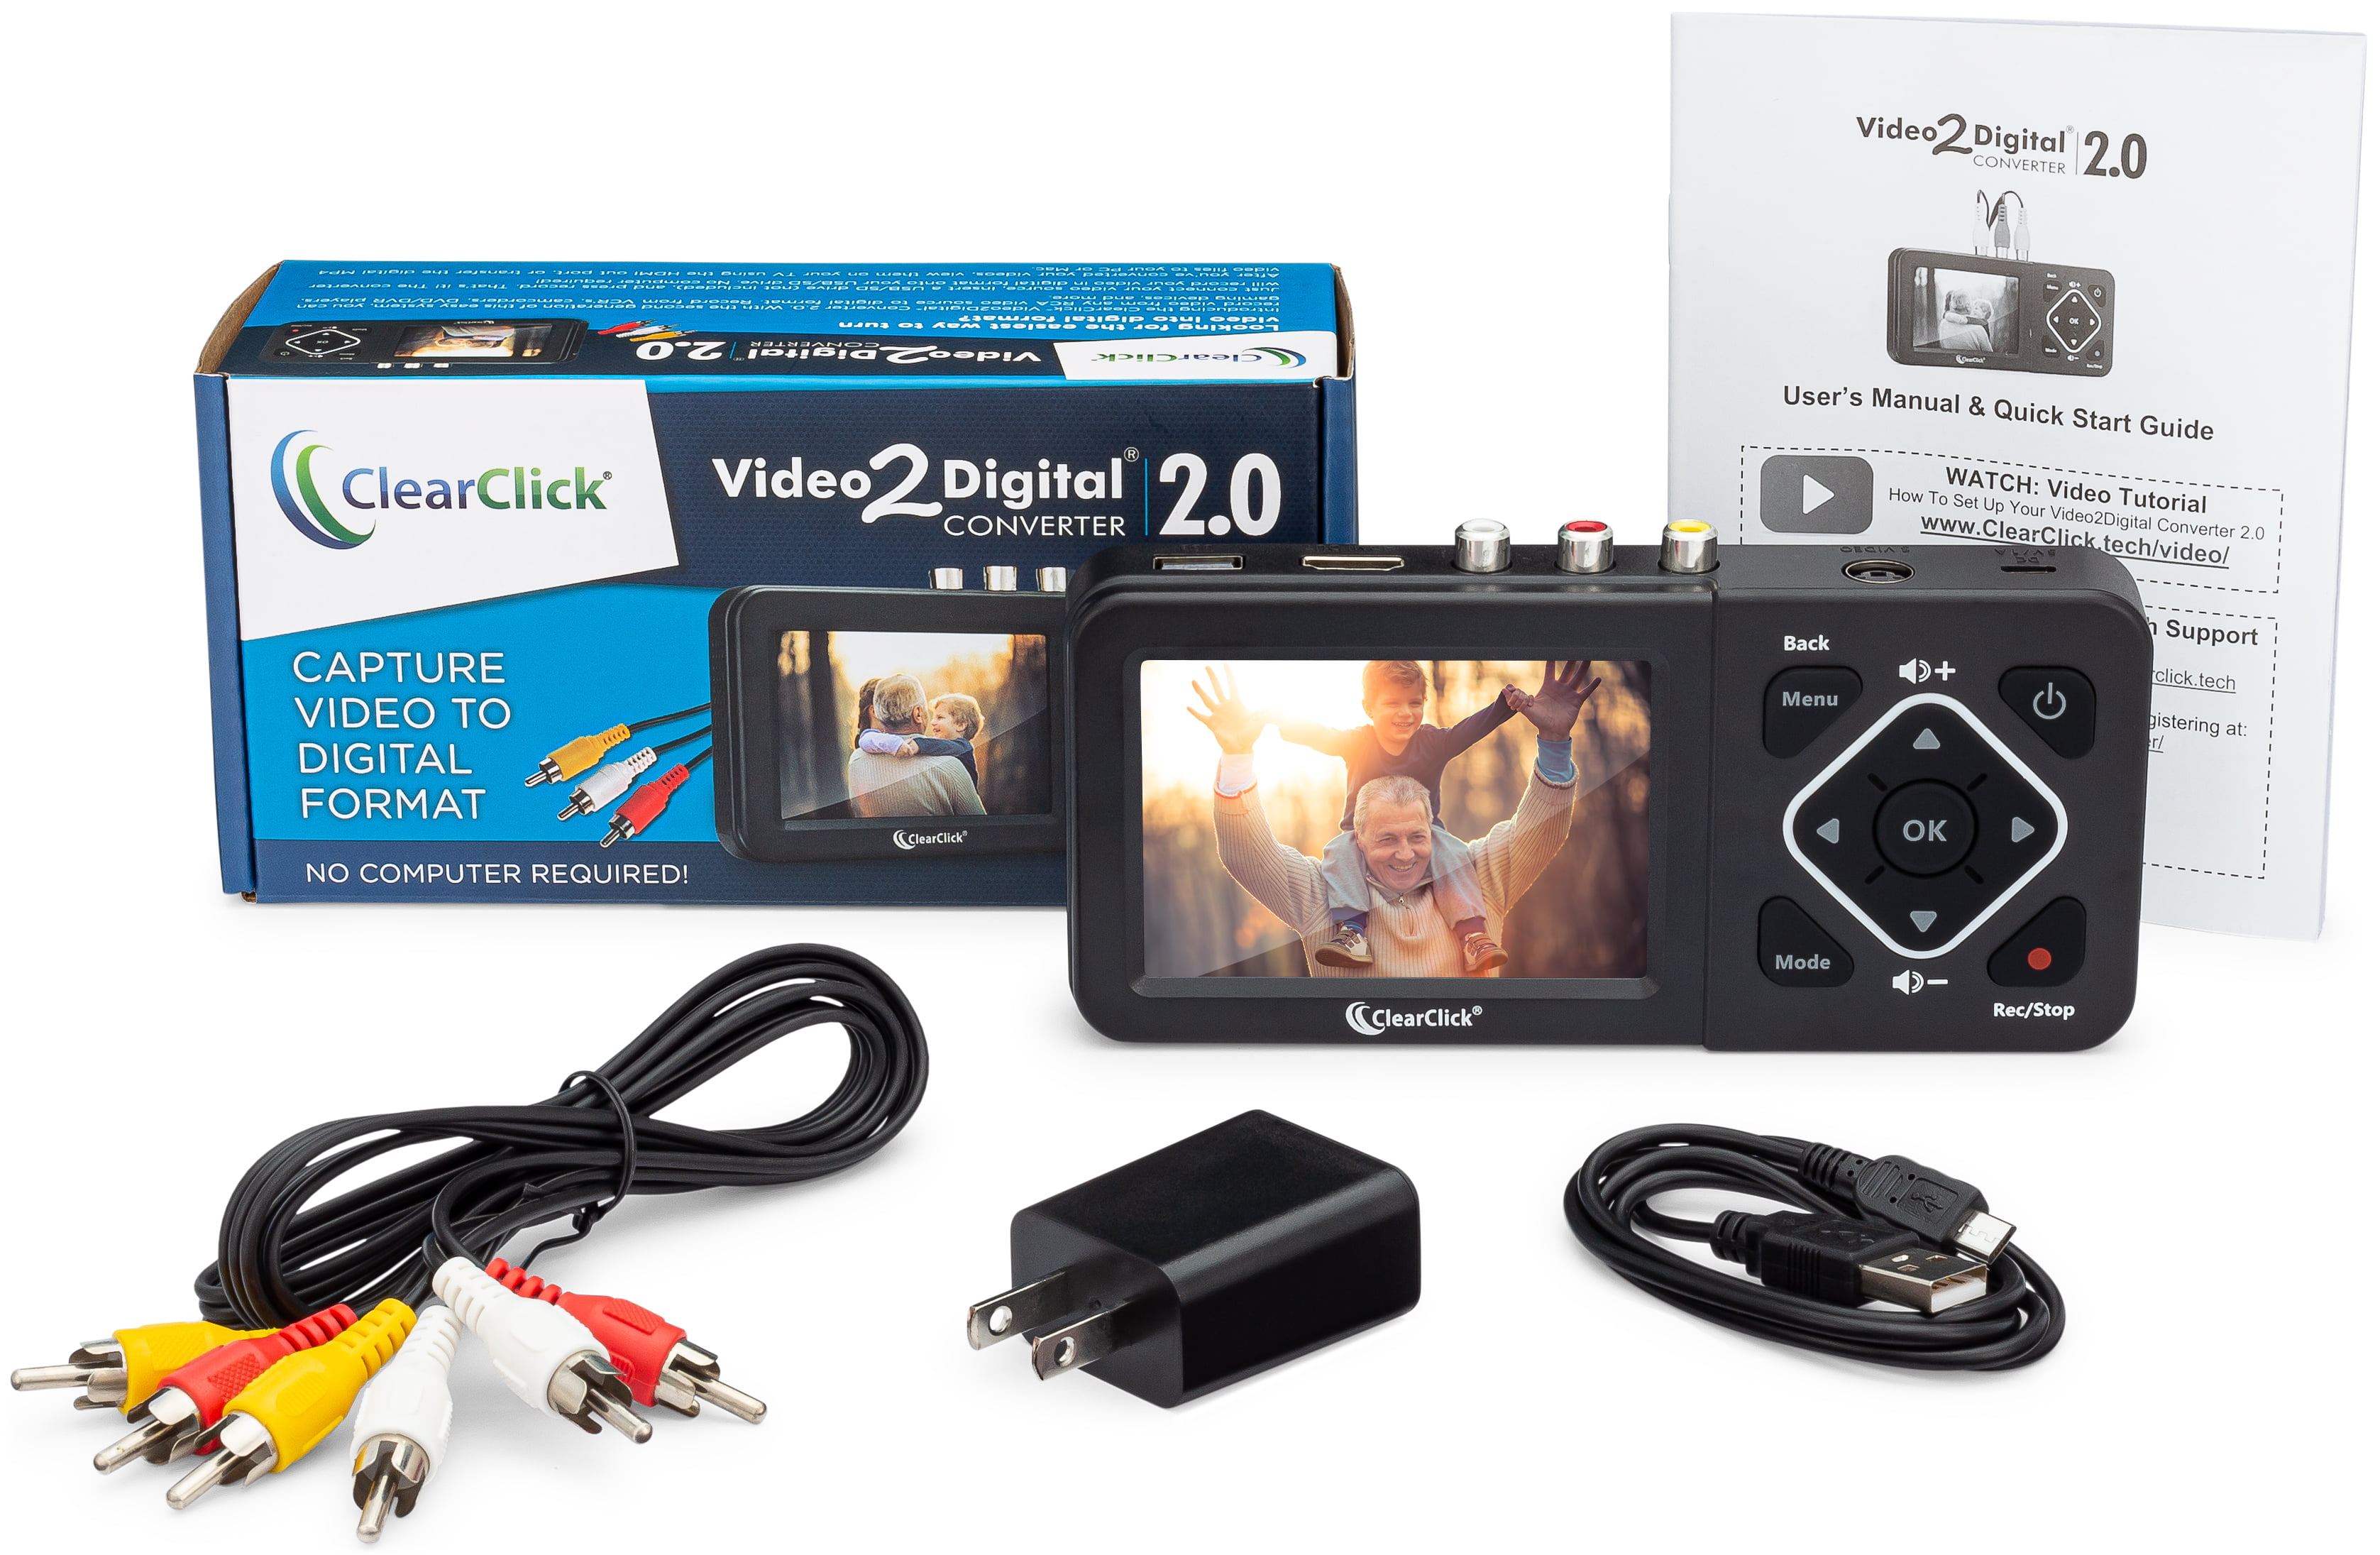  ClearClick Convertidor y grabadora AV a HD 2.0 (segunda  generación) - Adaptador AV RCA a HDMI para convertir y grabar video - para  VCR, VHS, DVD, videocámara, Hi8, juegos a TV : Electrónica